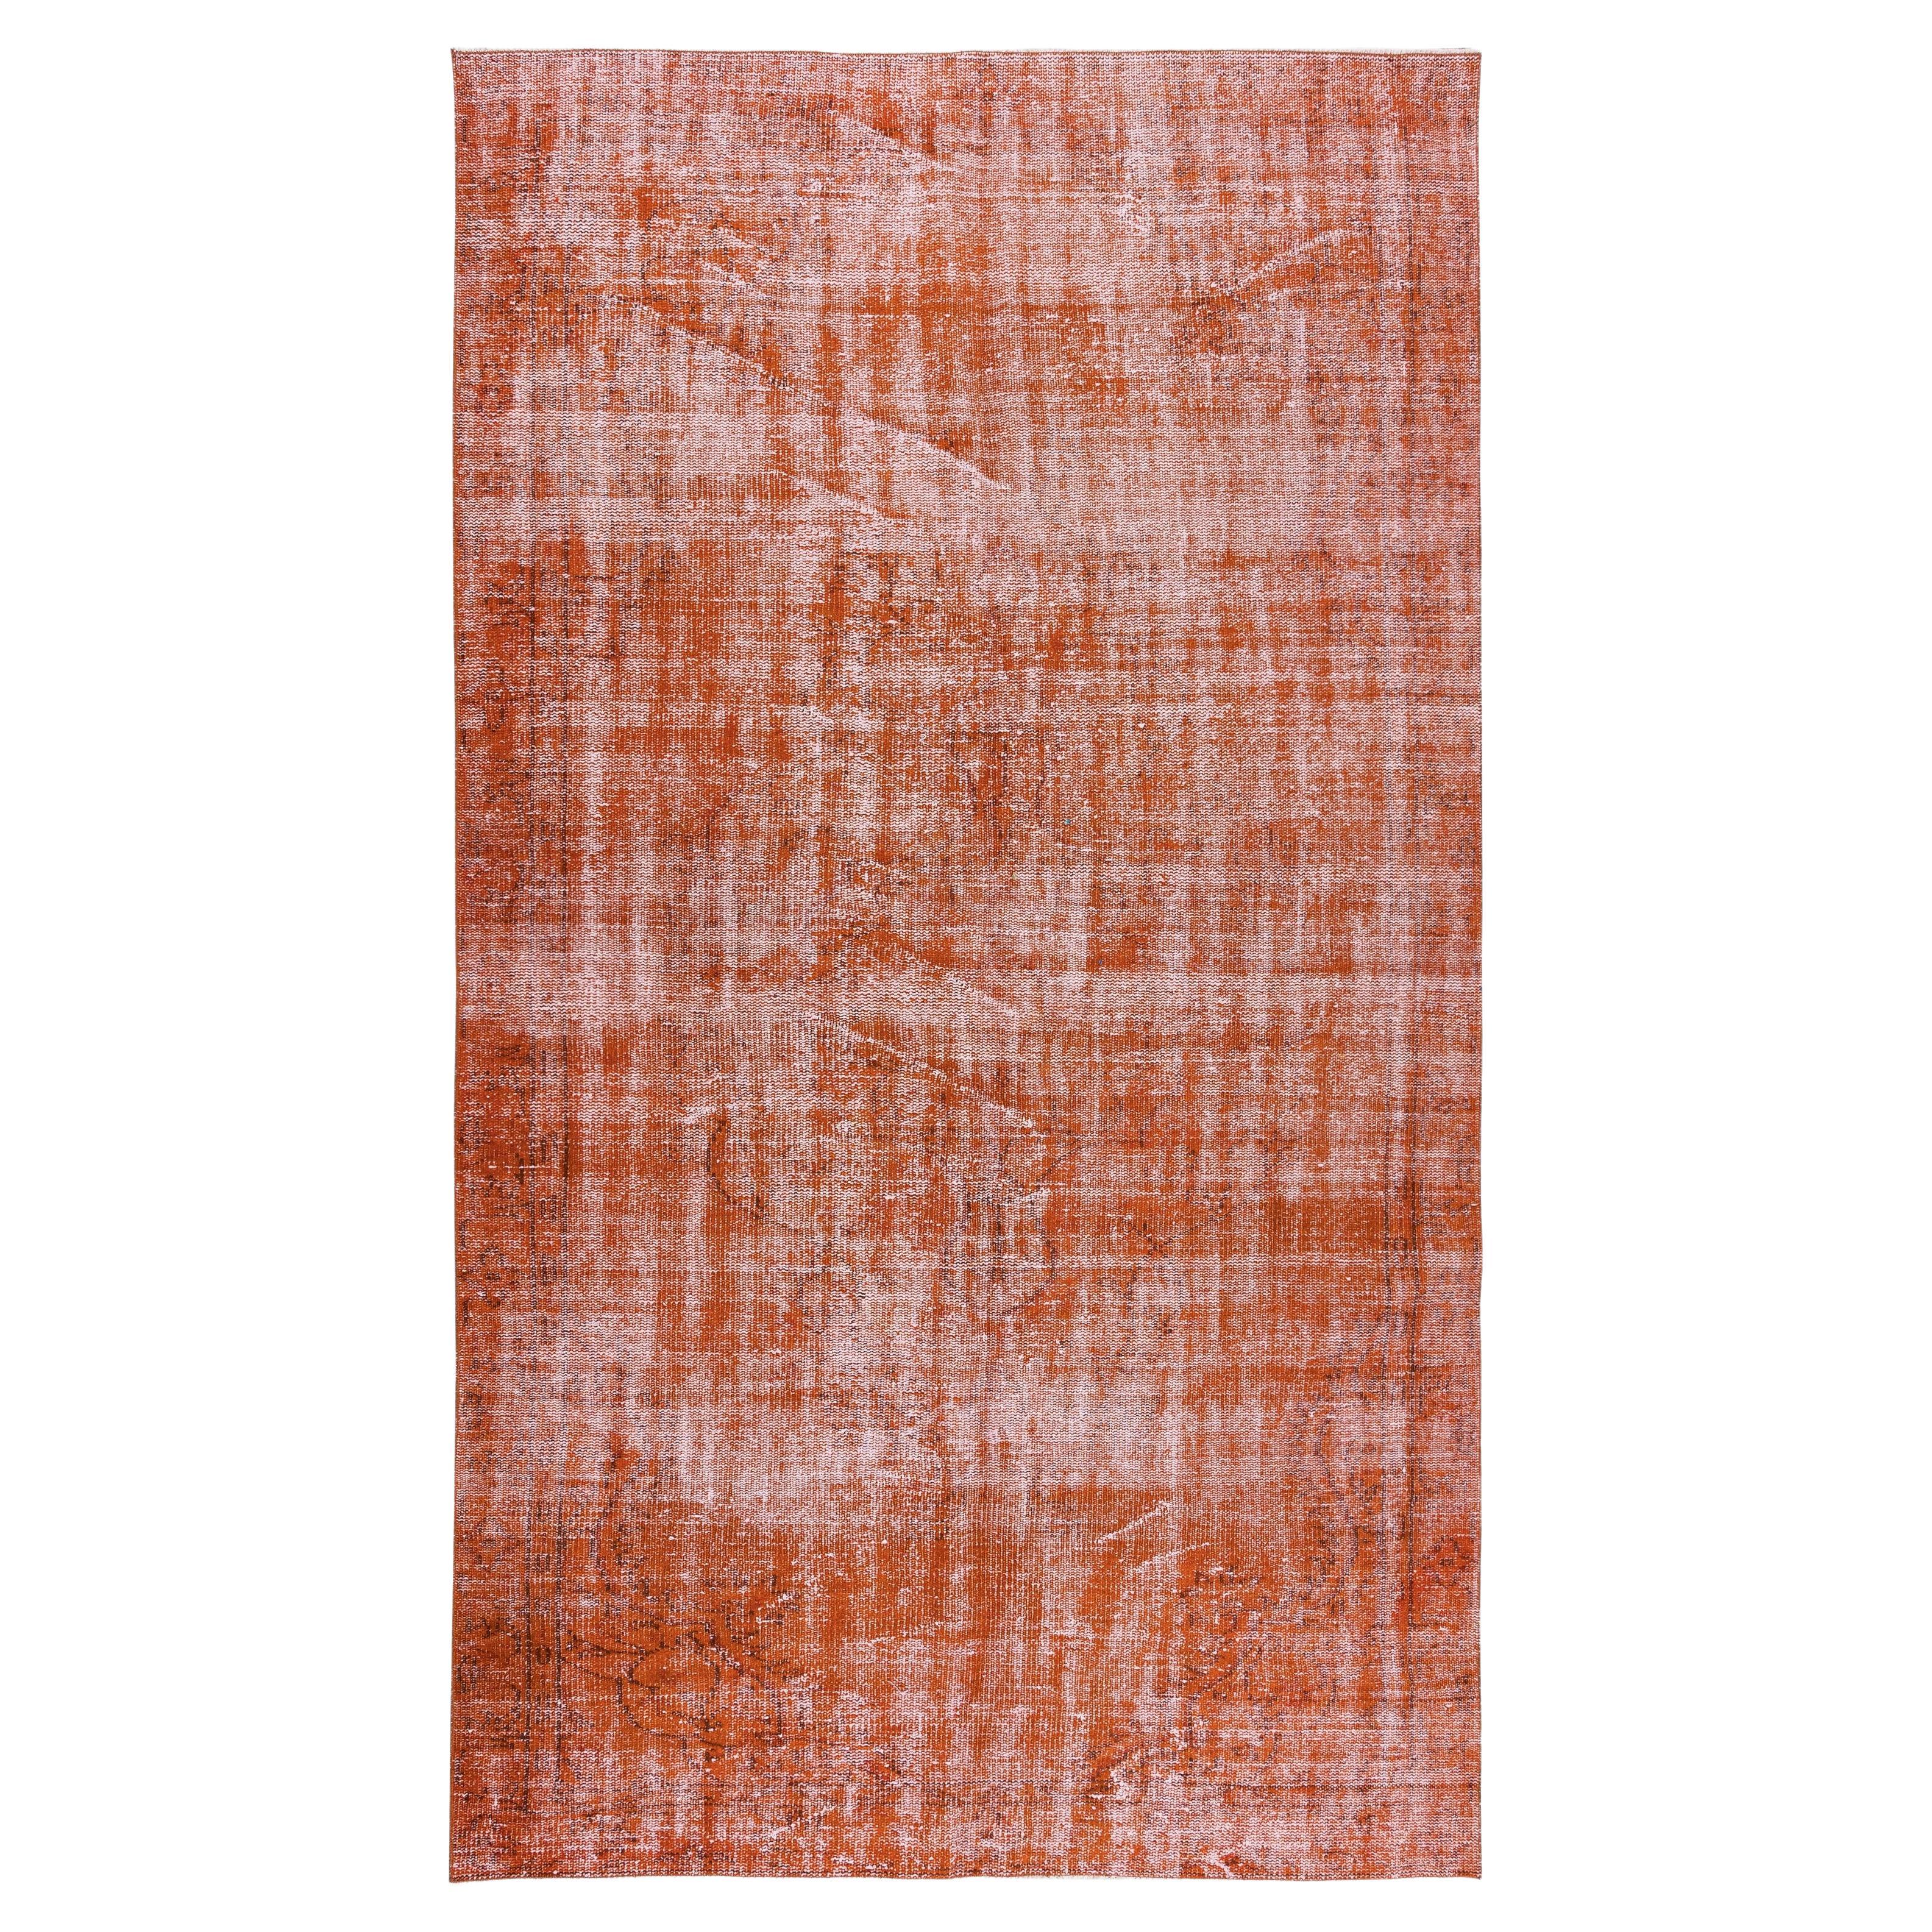 Orange Re-Dyed Rug, 1960s Turkish Handmade Carpet for Modern Interior For Sale